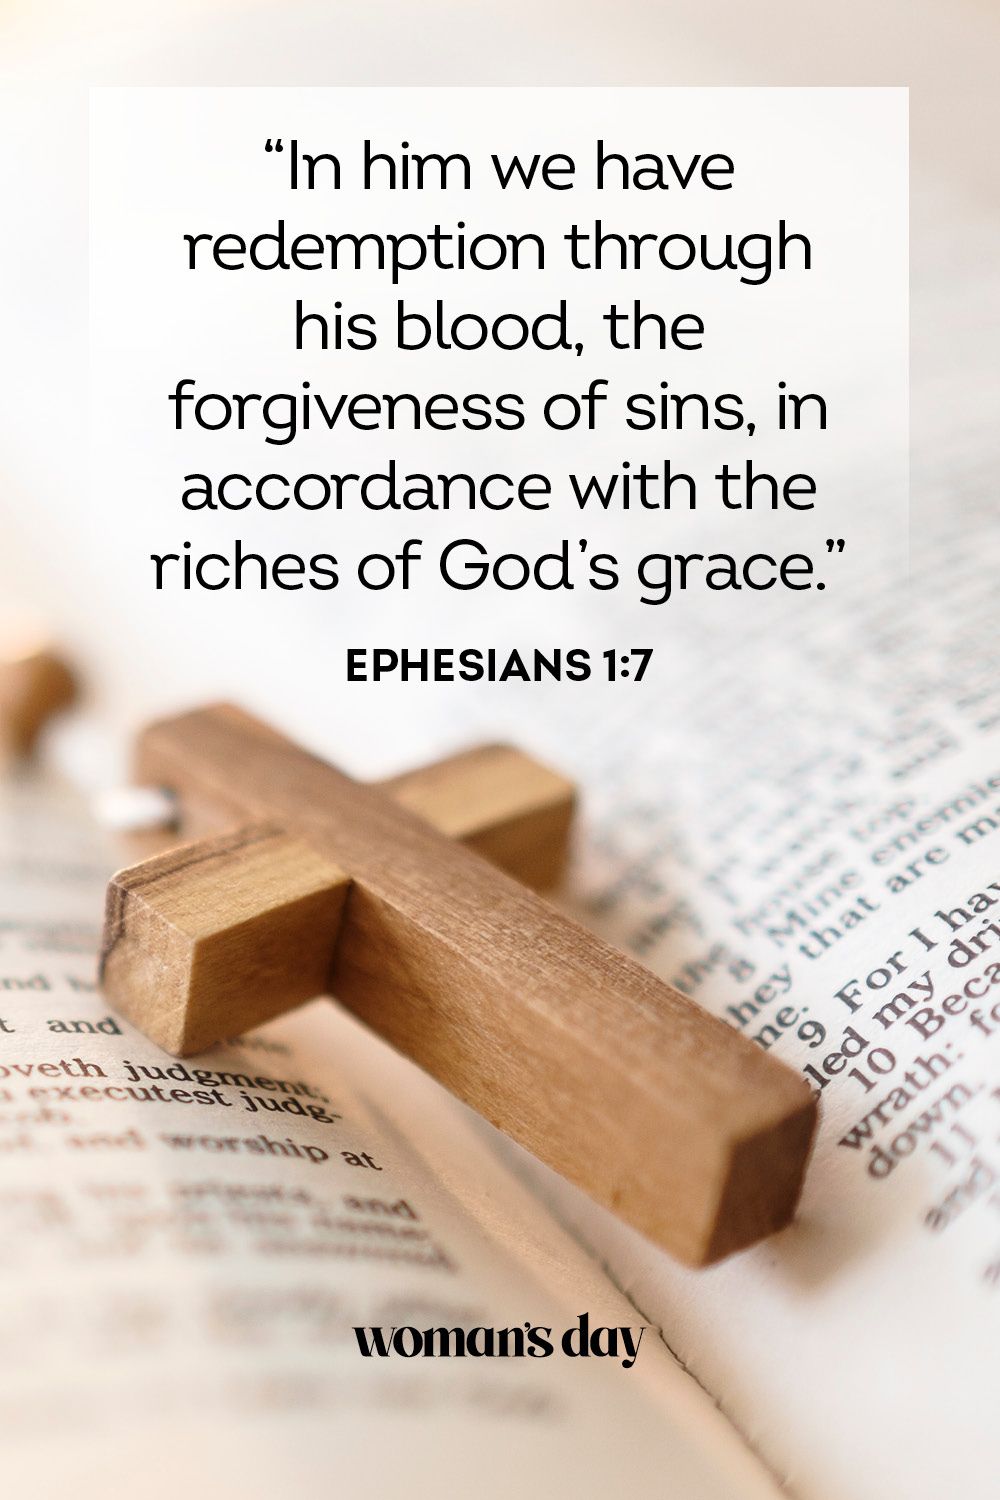 god forgives all sins